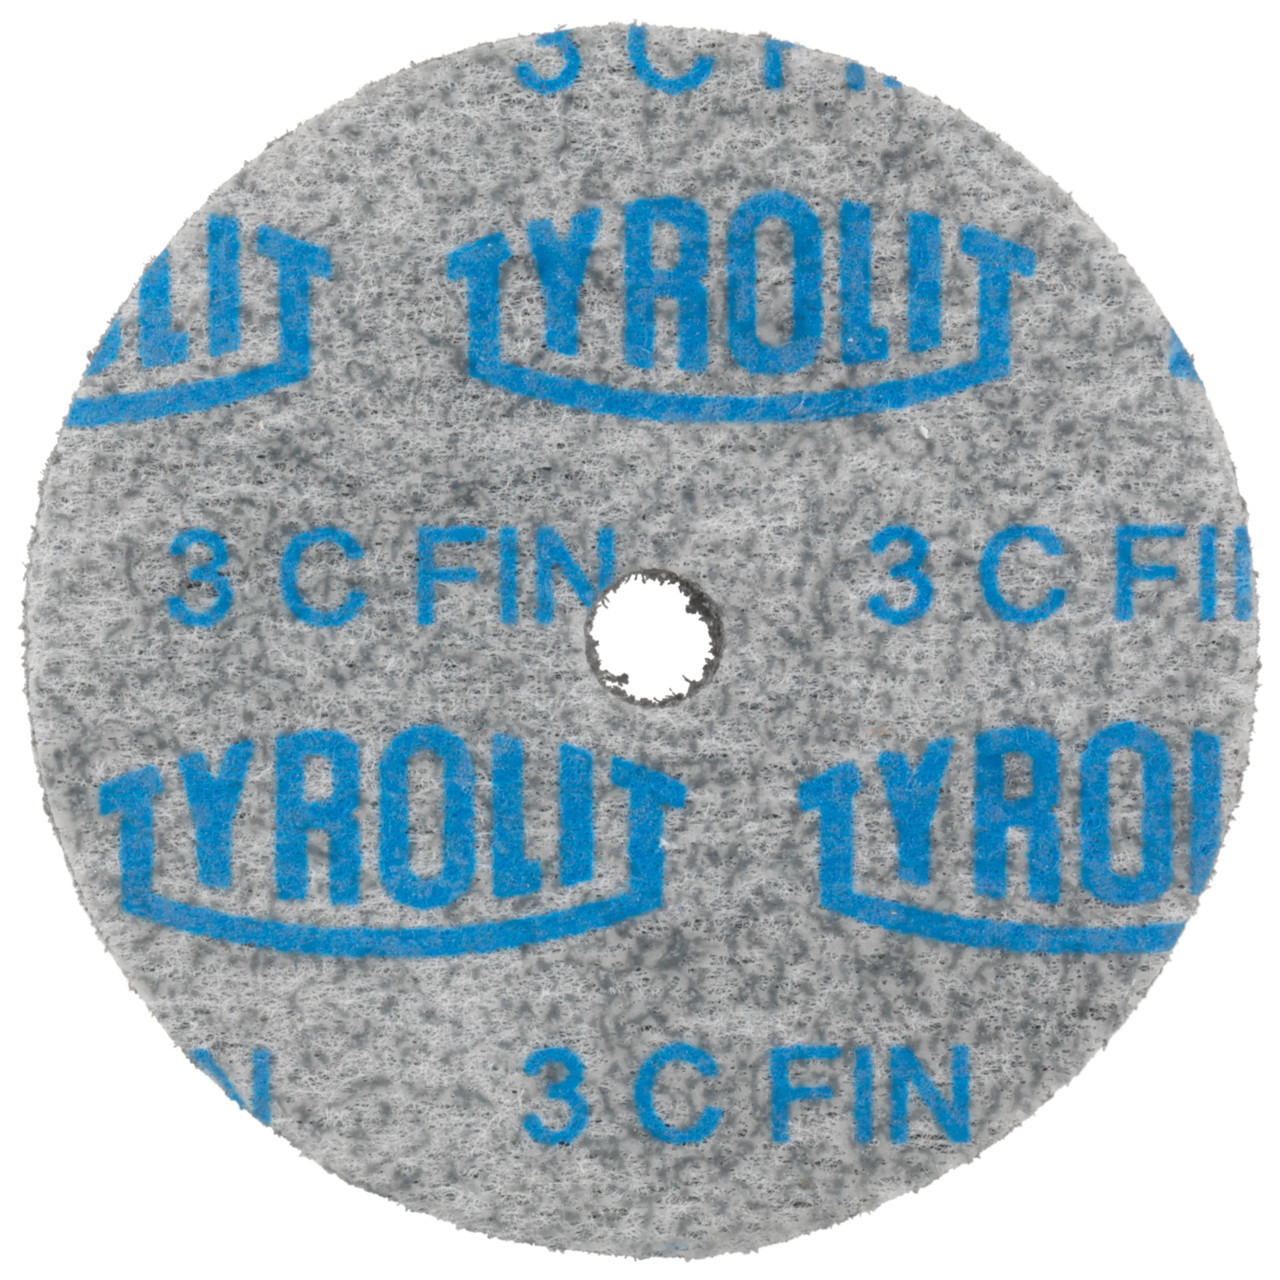 Tyrolit Discos compactos prensados DxDxH 76x6x6,3 Inserto universal, 2 A MEDIO, forma: 1, Art. 34189552